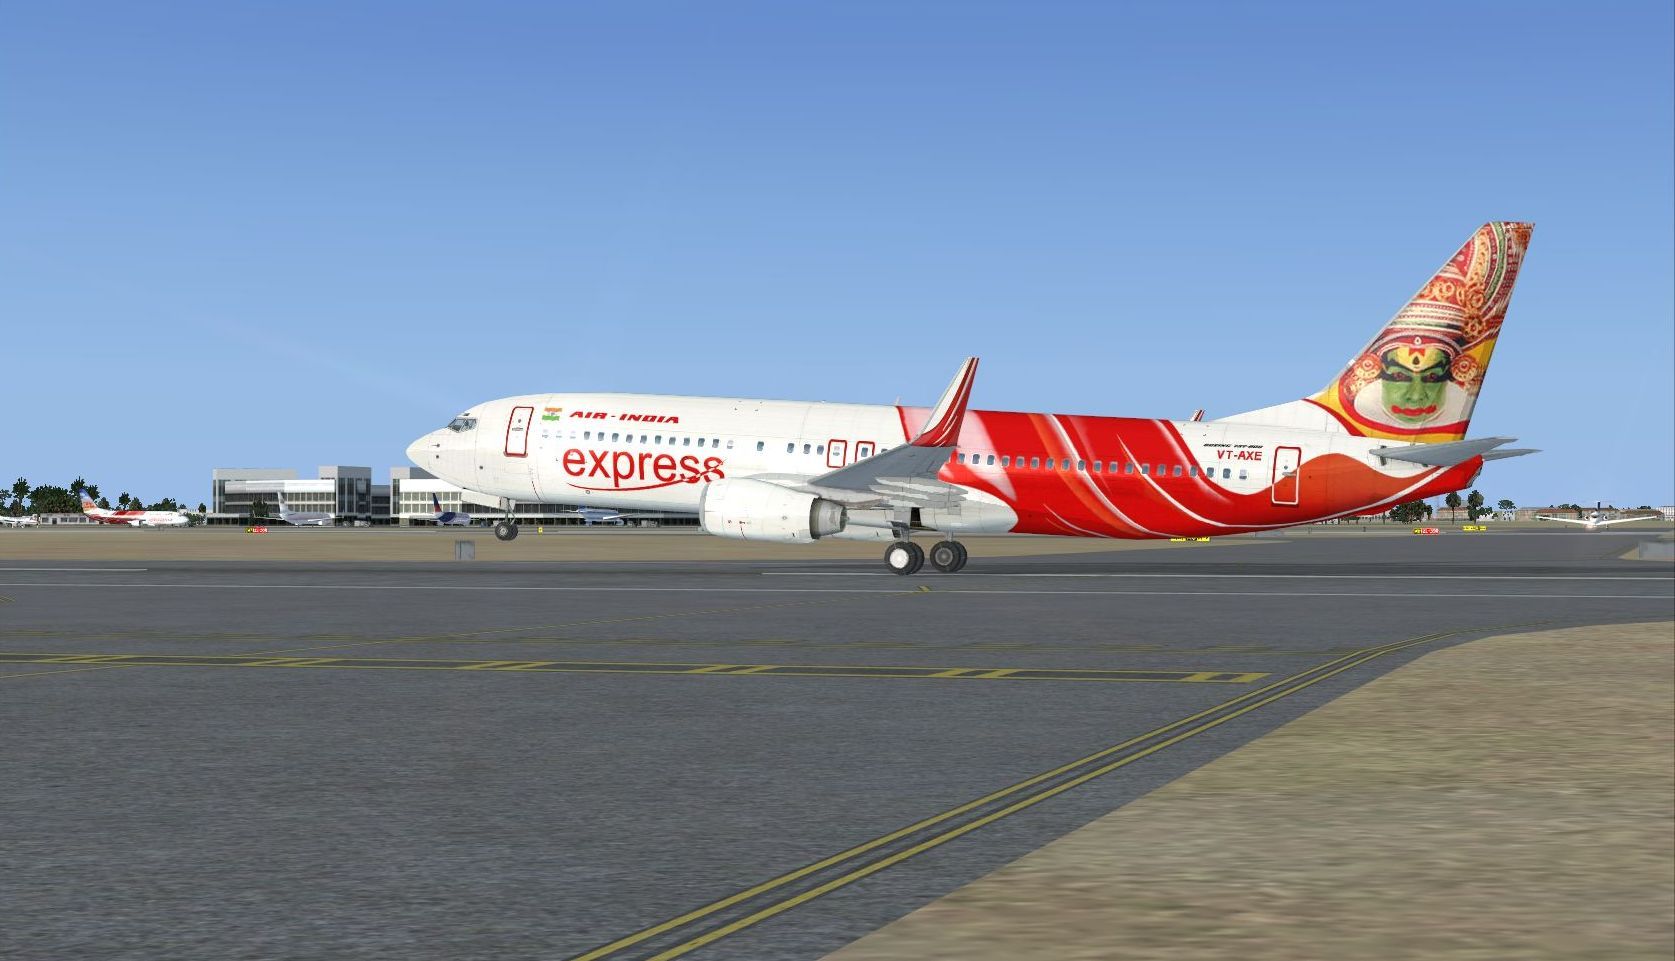 Air India Express 737 Next Generation